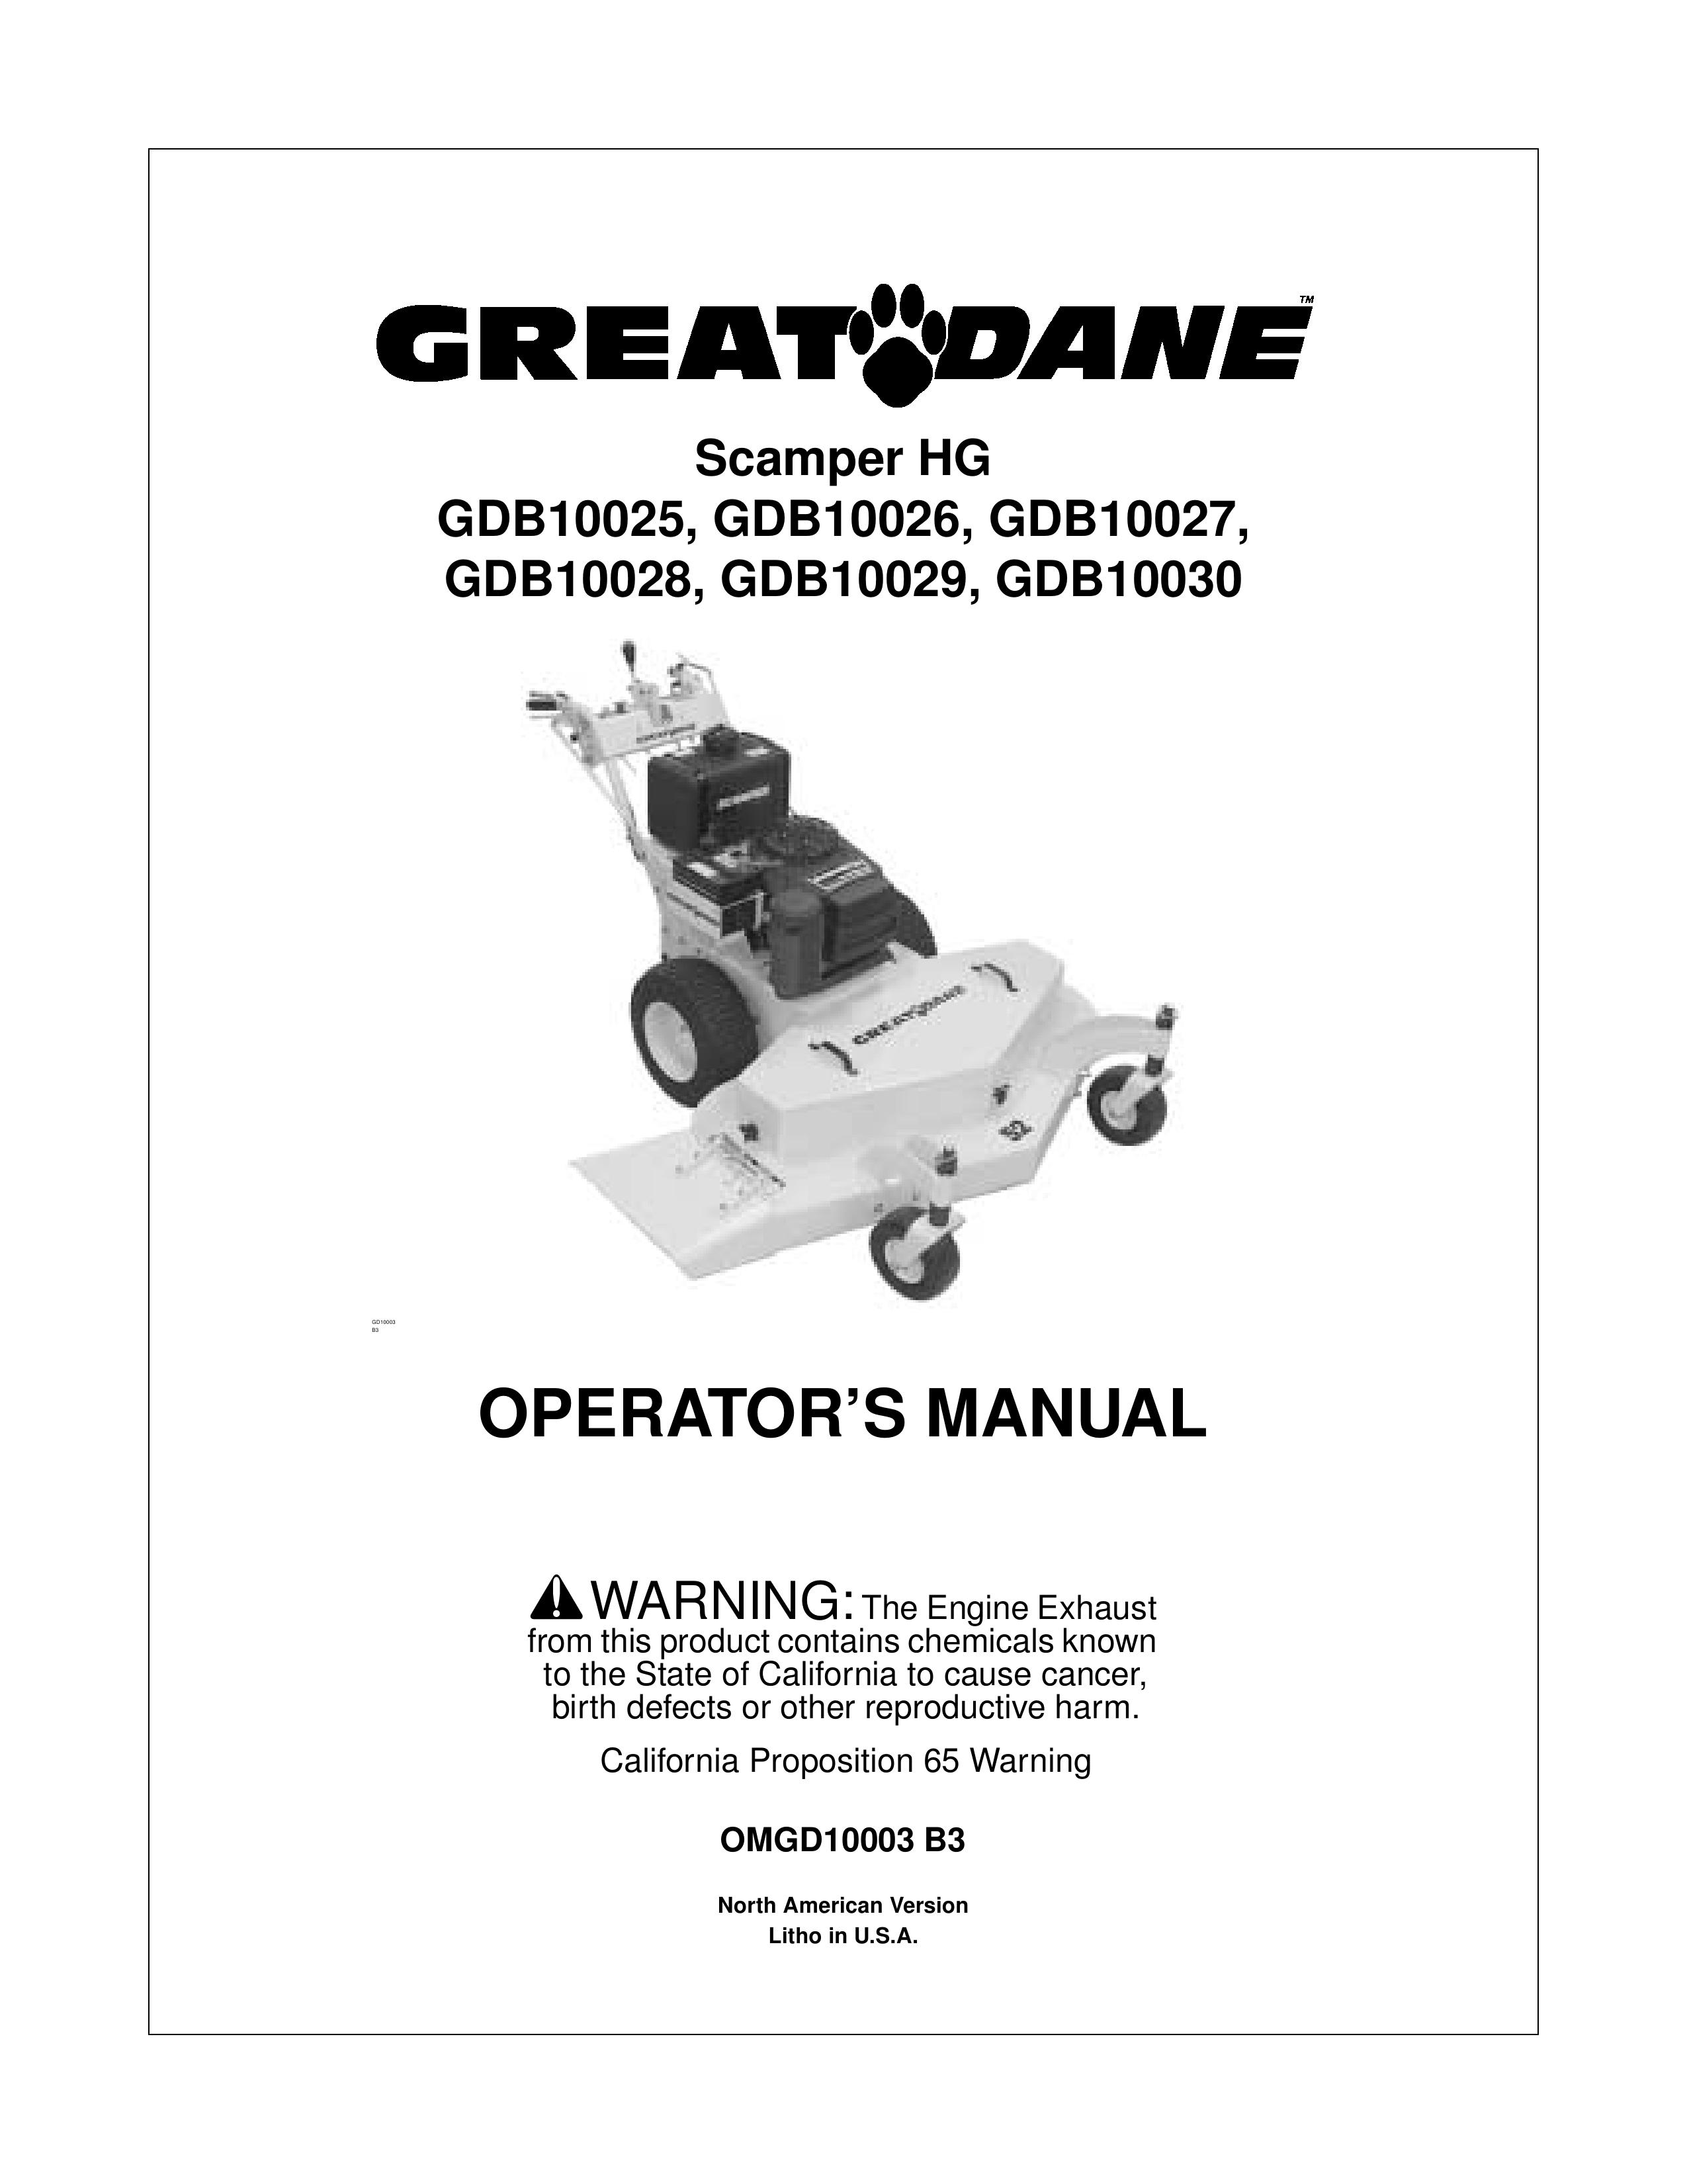 Great Dane GDB10025 Lawn Mower User Manual